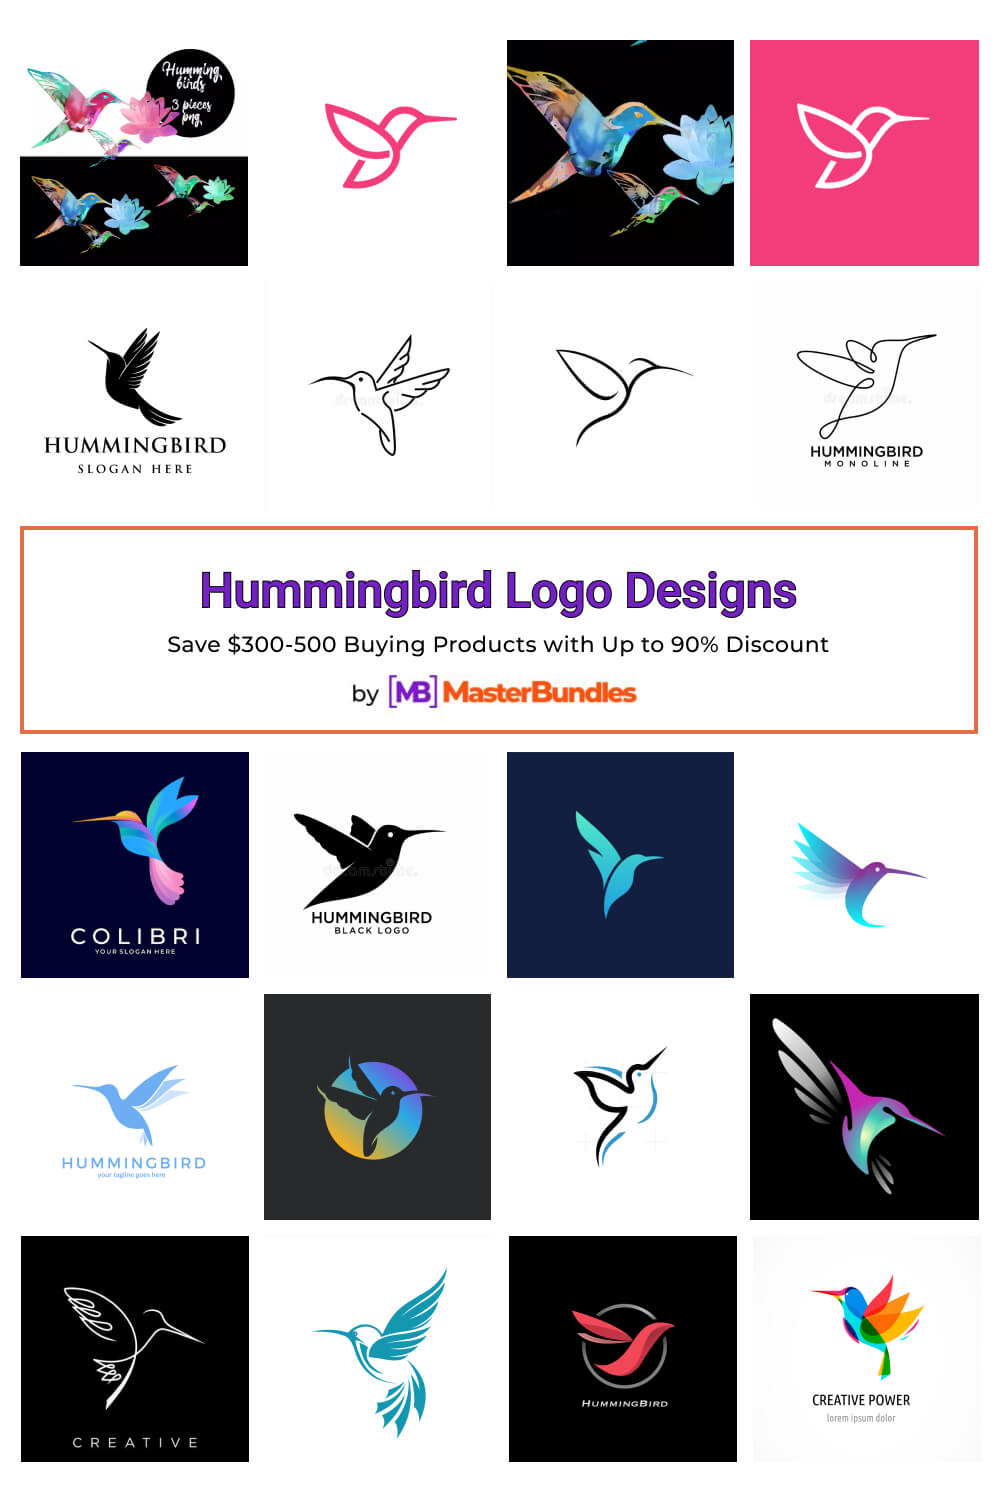 hummingbird logo designs pinterest image.